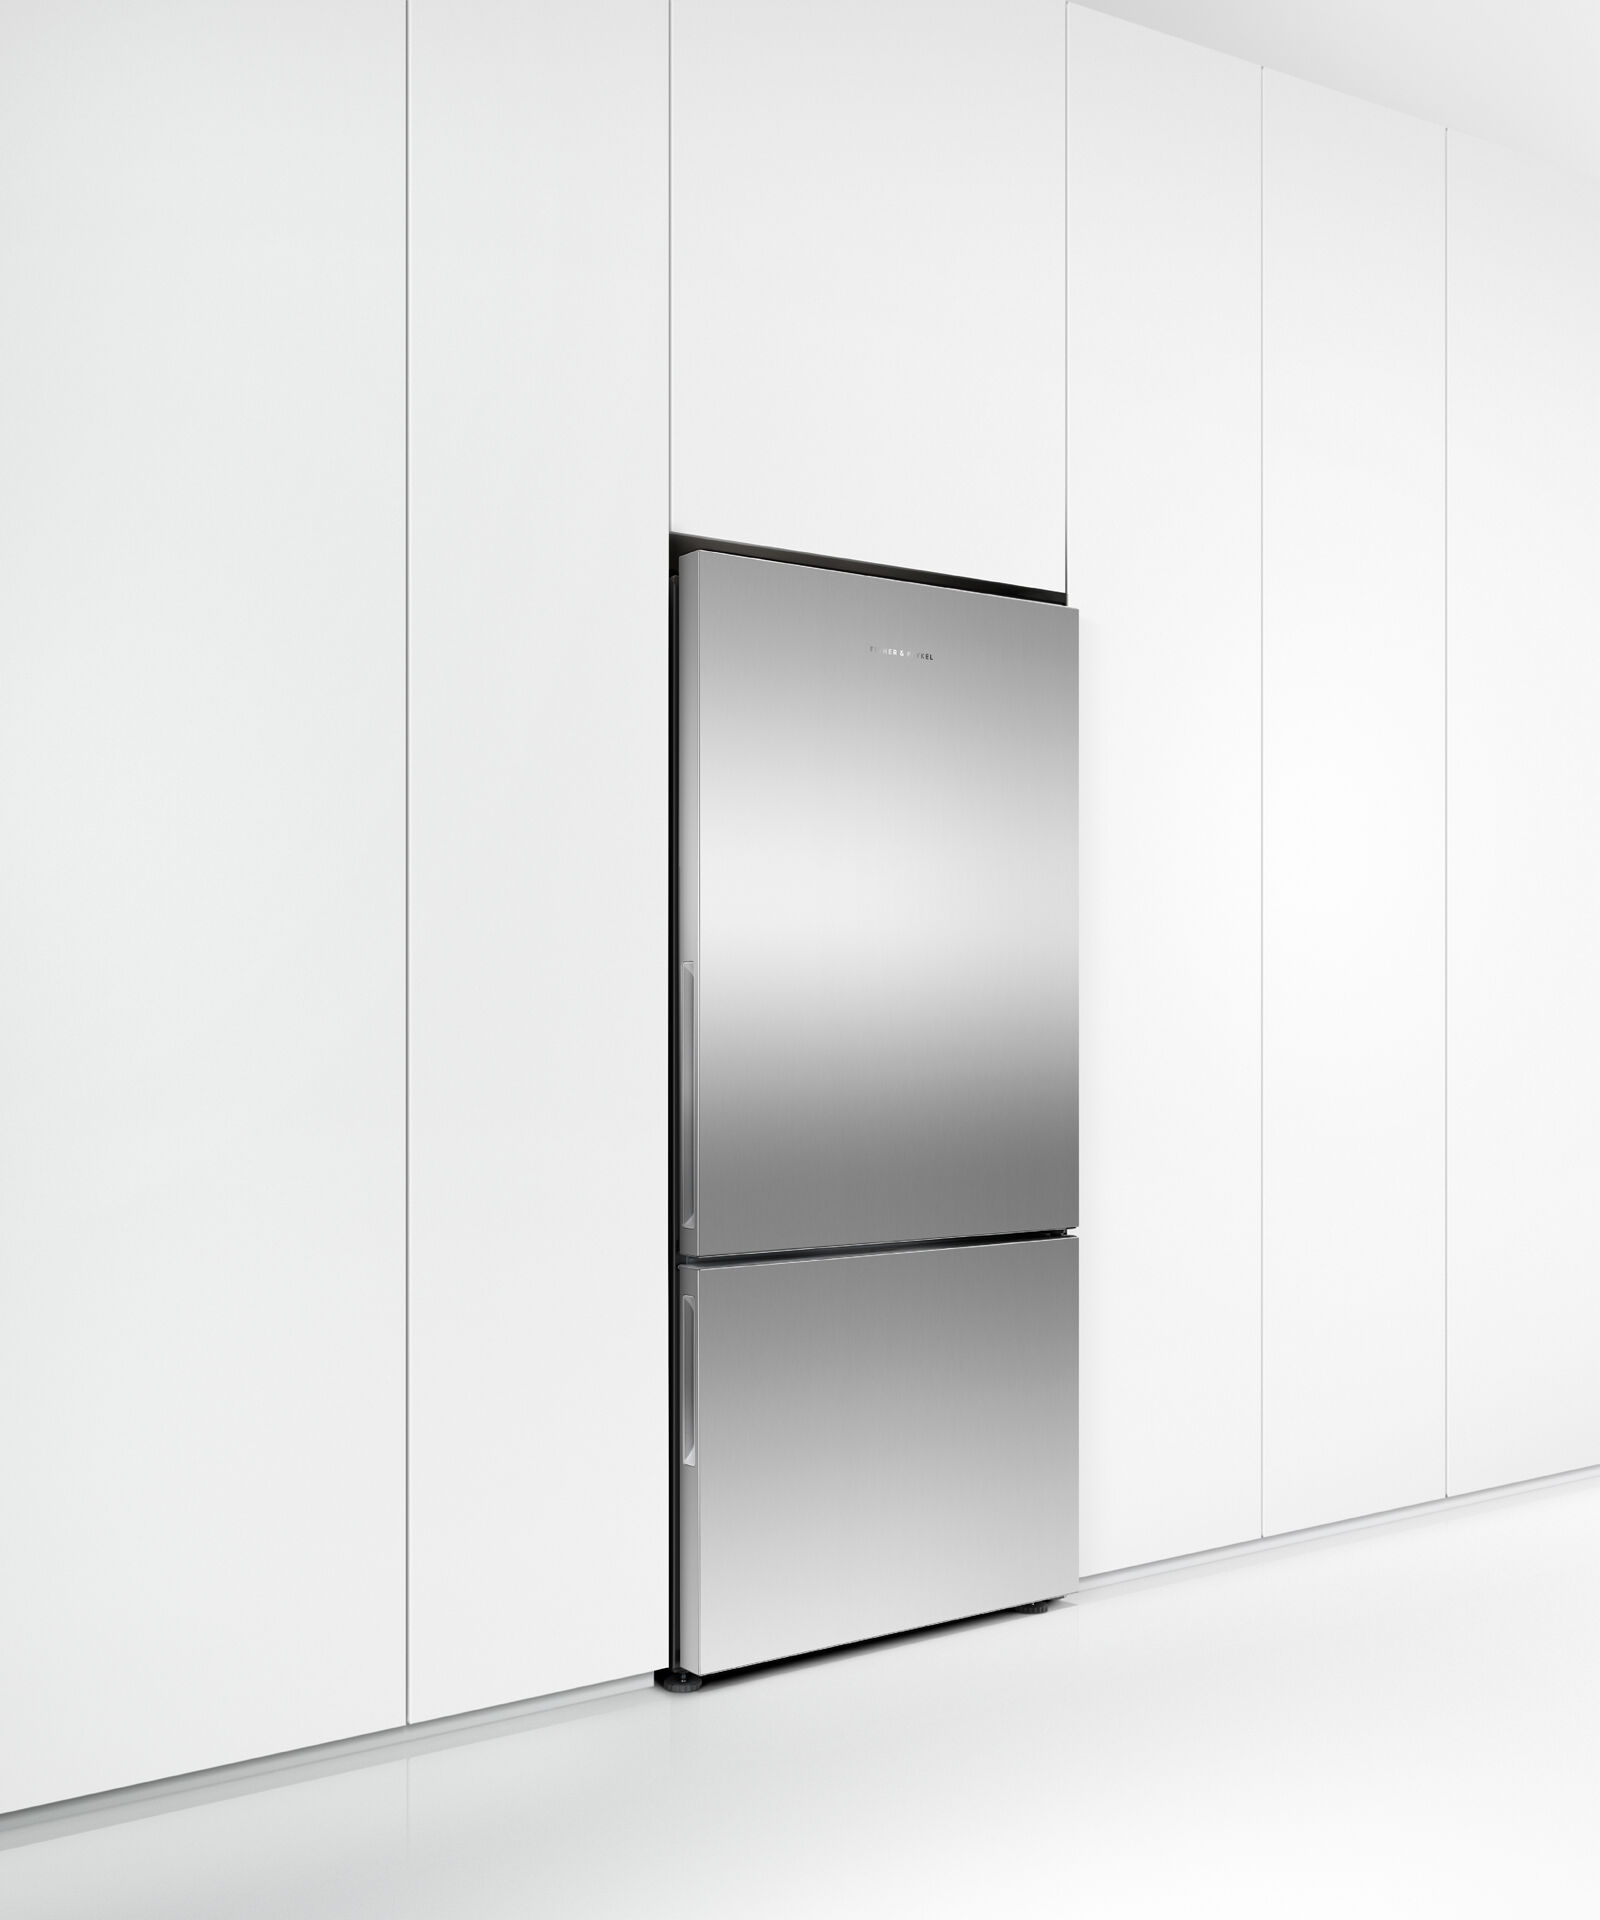 獨立式雪櫃冷凍櫃, 79cm gallery image 6.0